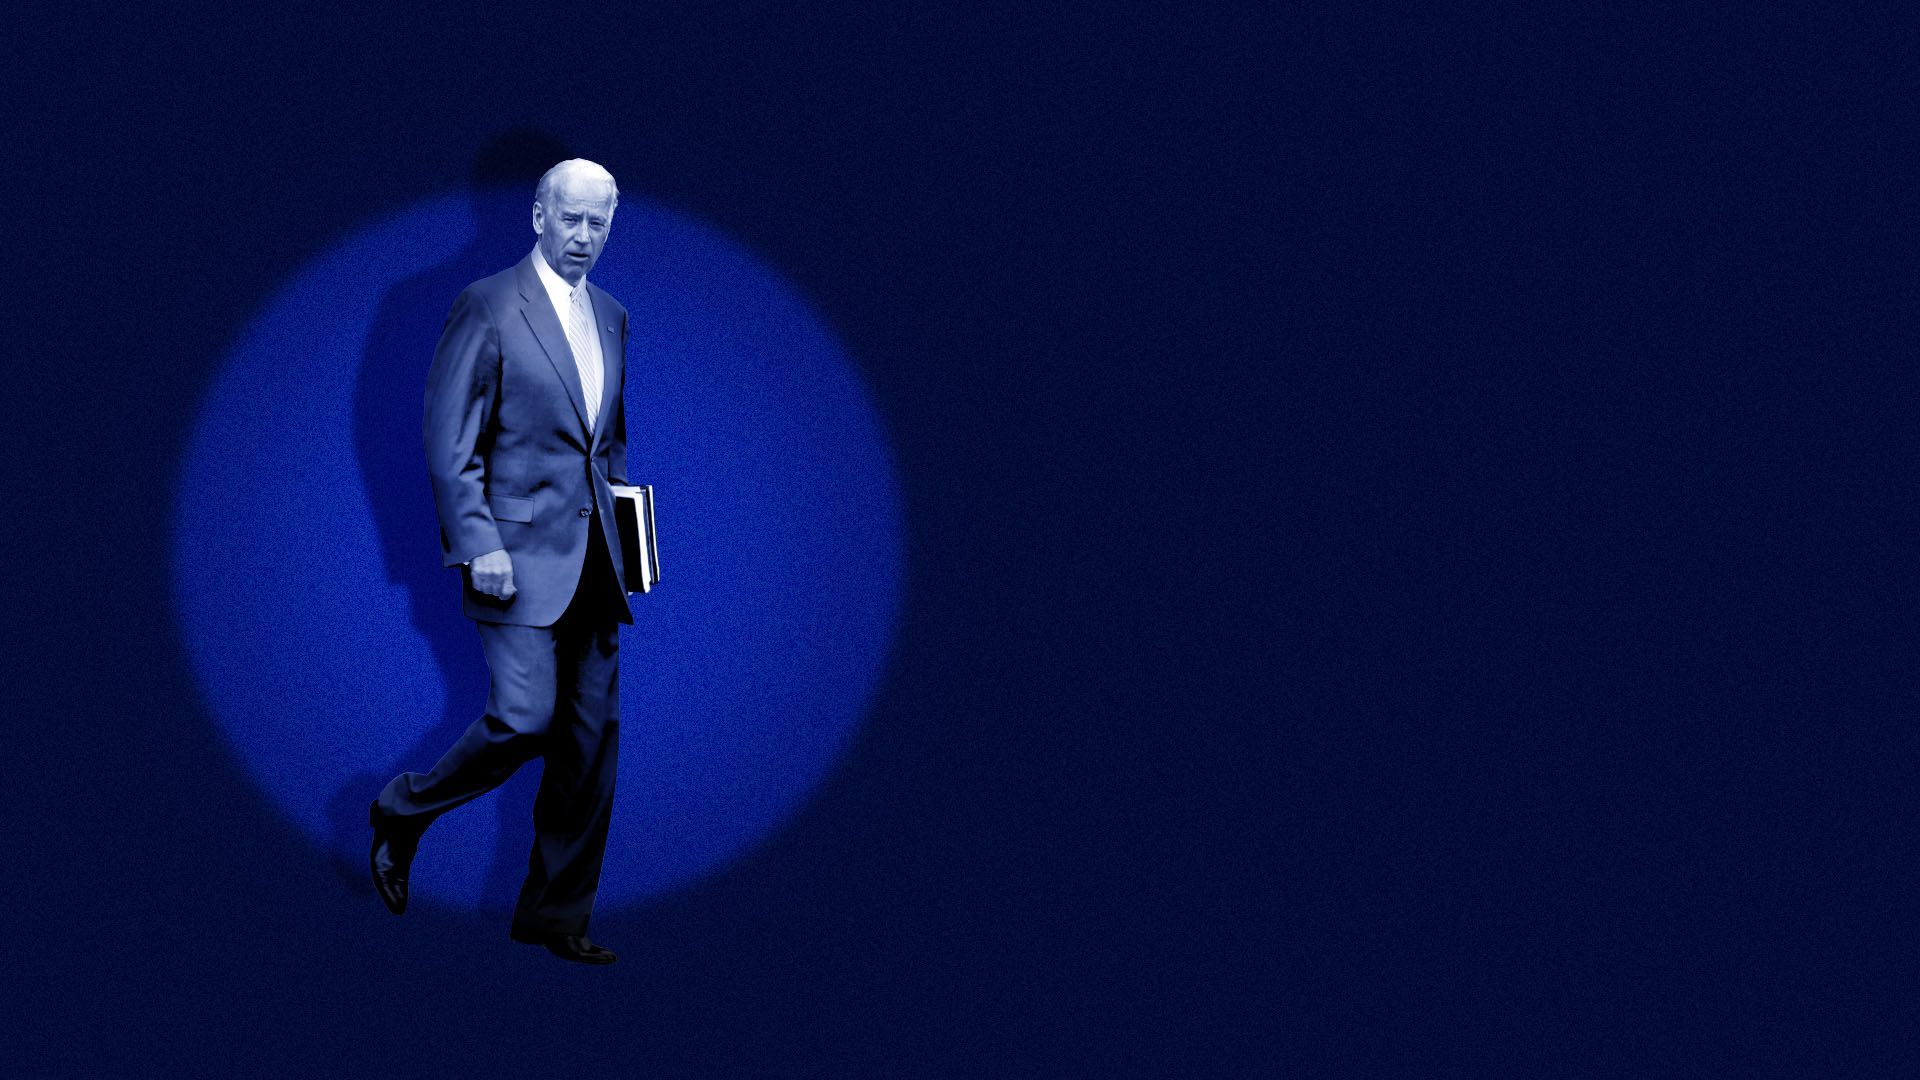 Illustration of candidate Joseph Biden caught in a blue headlight.